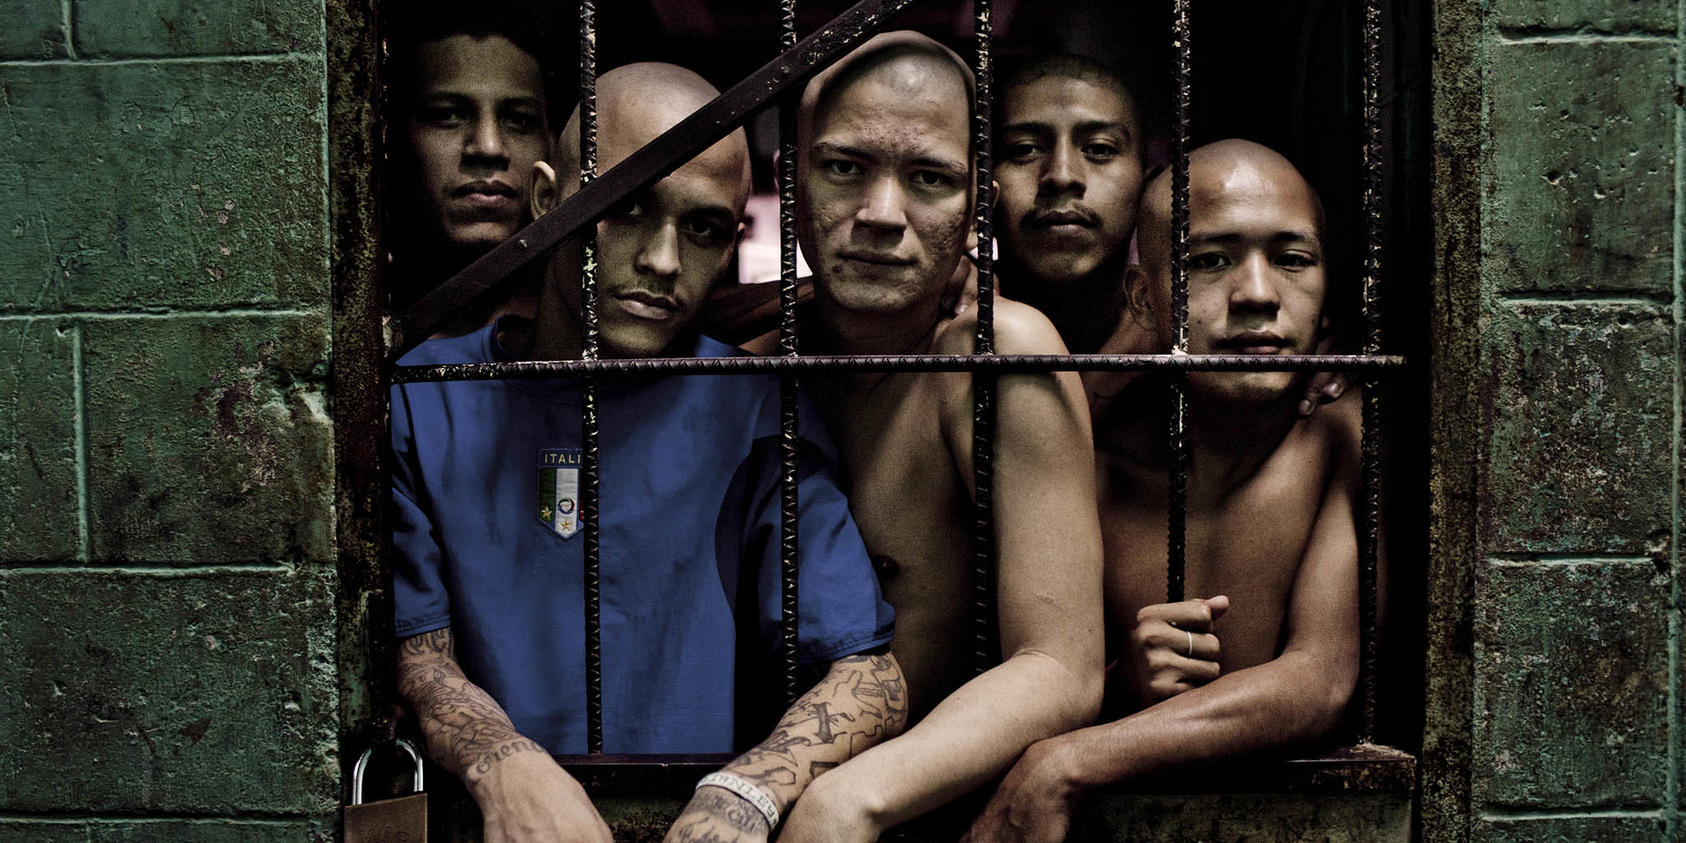 Members of the Barrio 18 gang at the Quezaltepeque prison in Quezaltepeque, El Salvador, Aug. 16, 2012. (Tomas Munita/The New York Times)